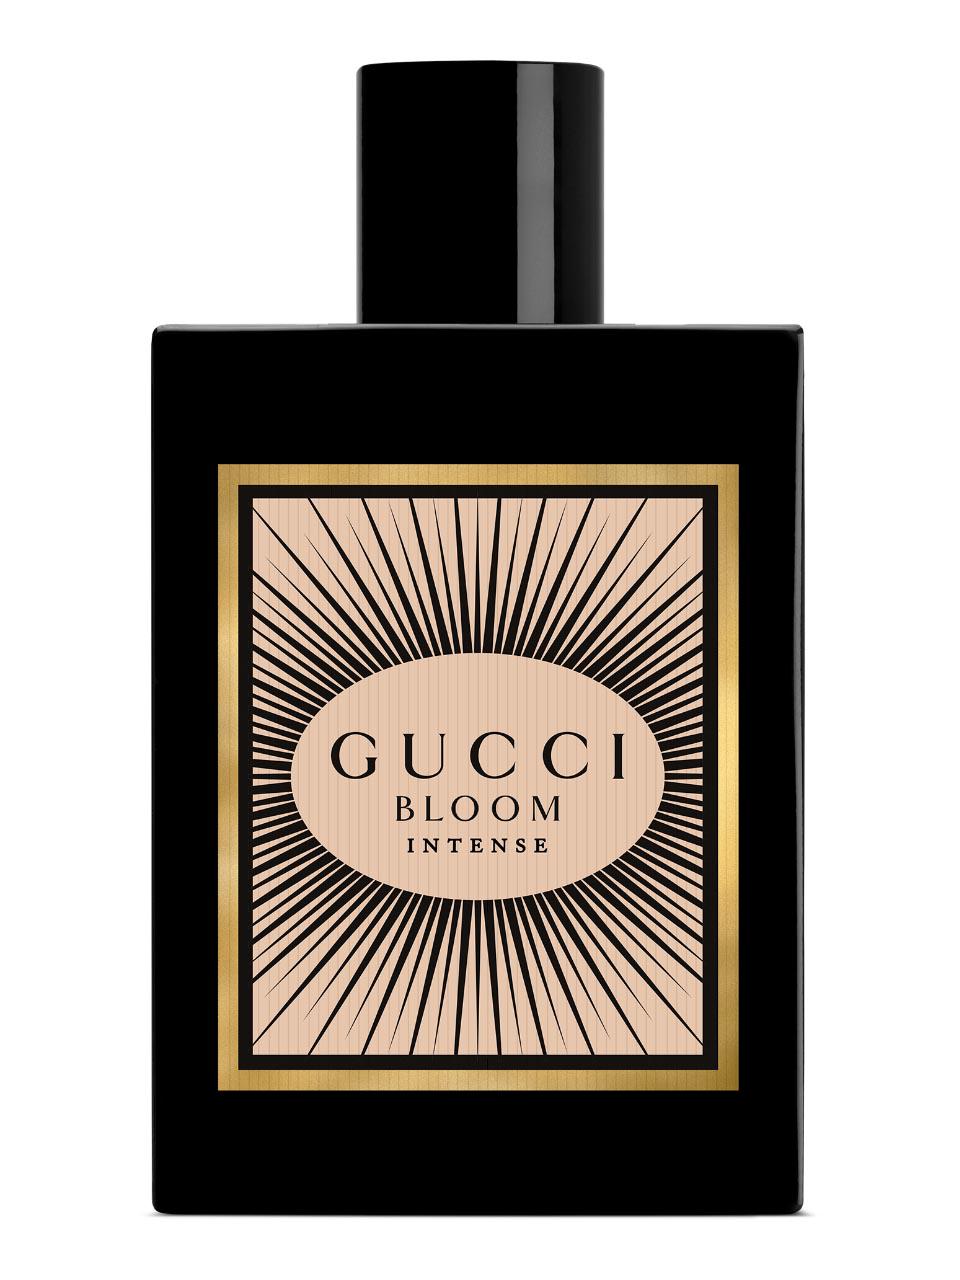 Gucci Bloom Profumo Di Fiori Eau de Parfum 50ml in duty-free at airport  Boryspil